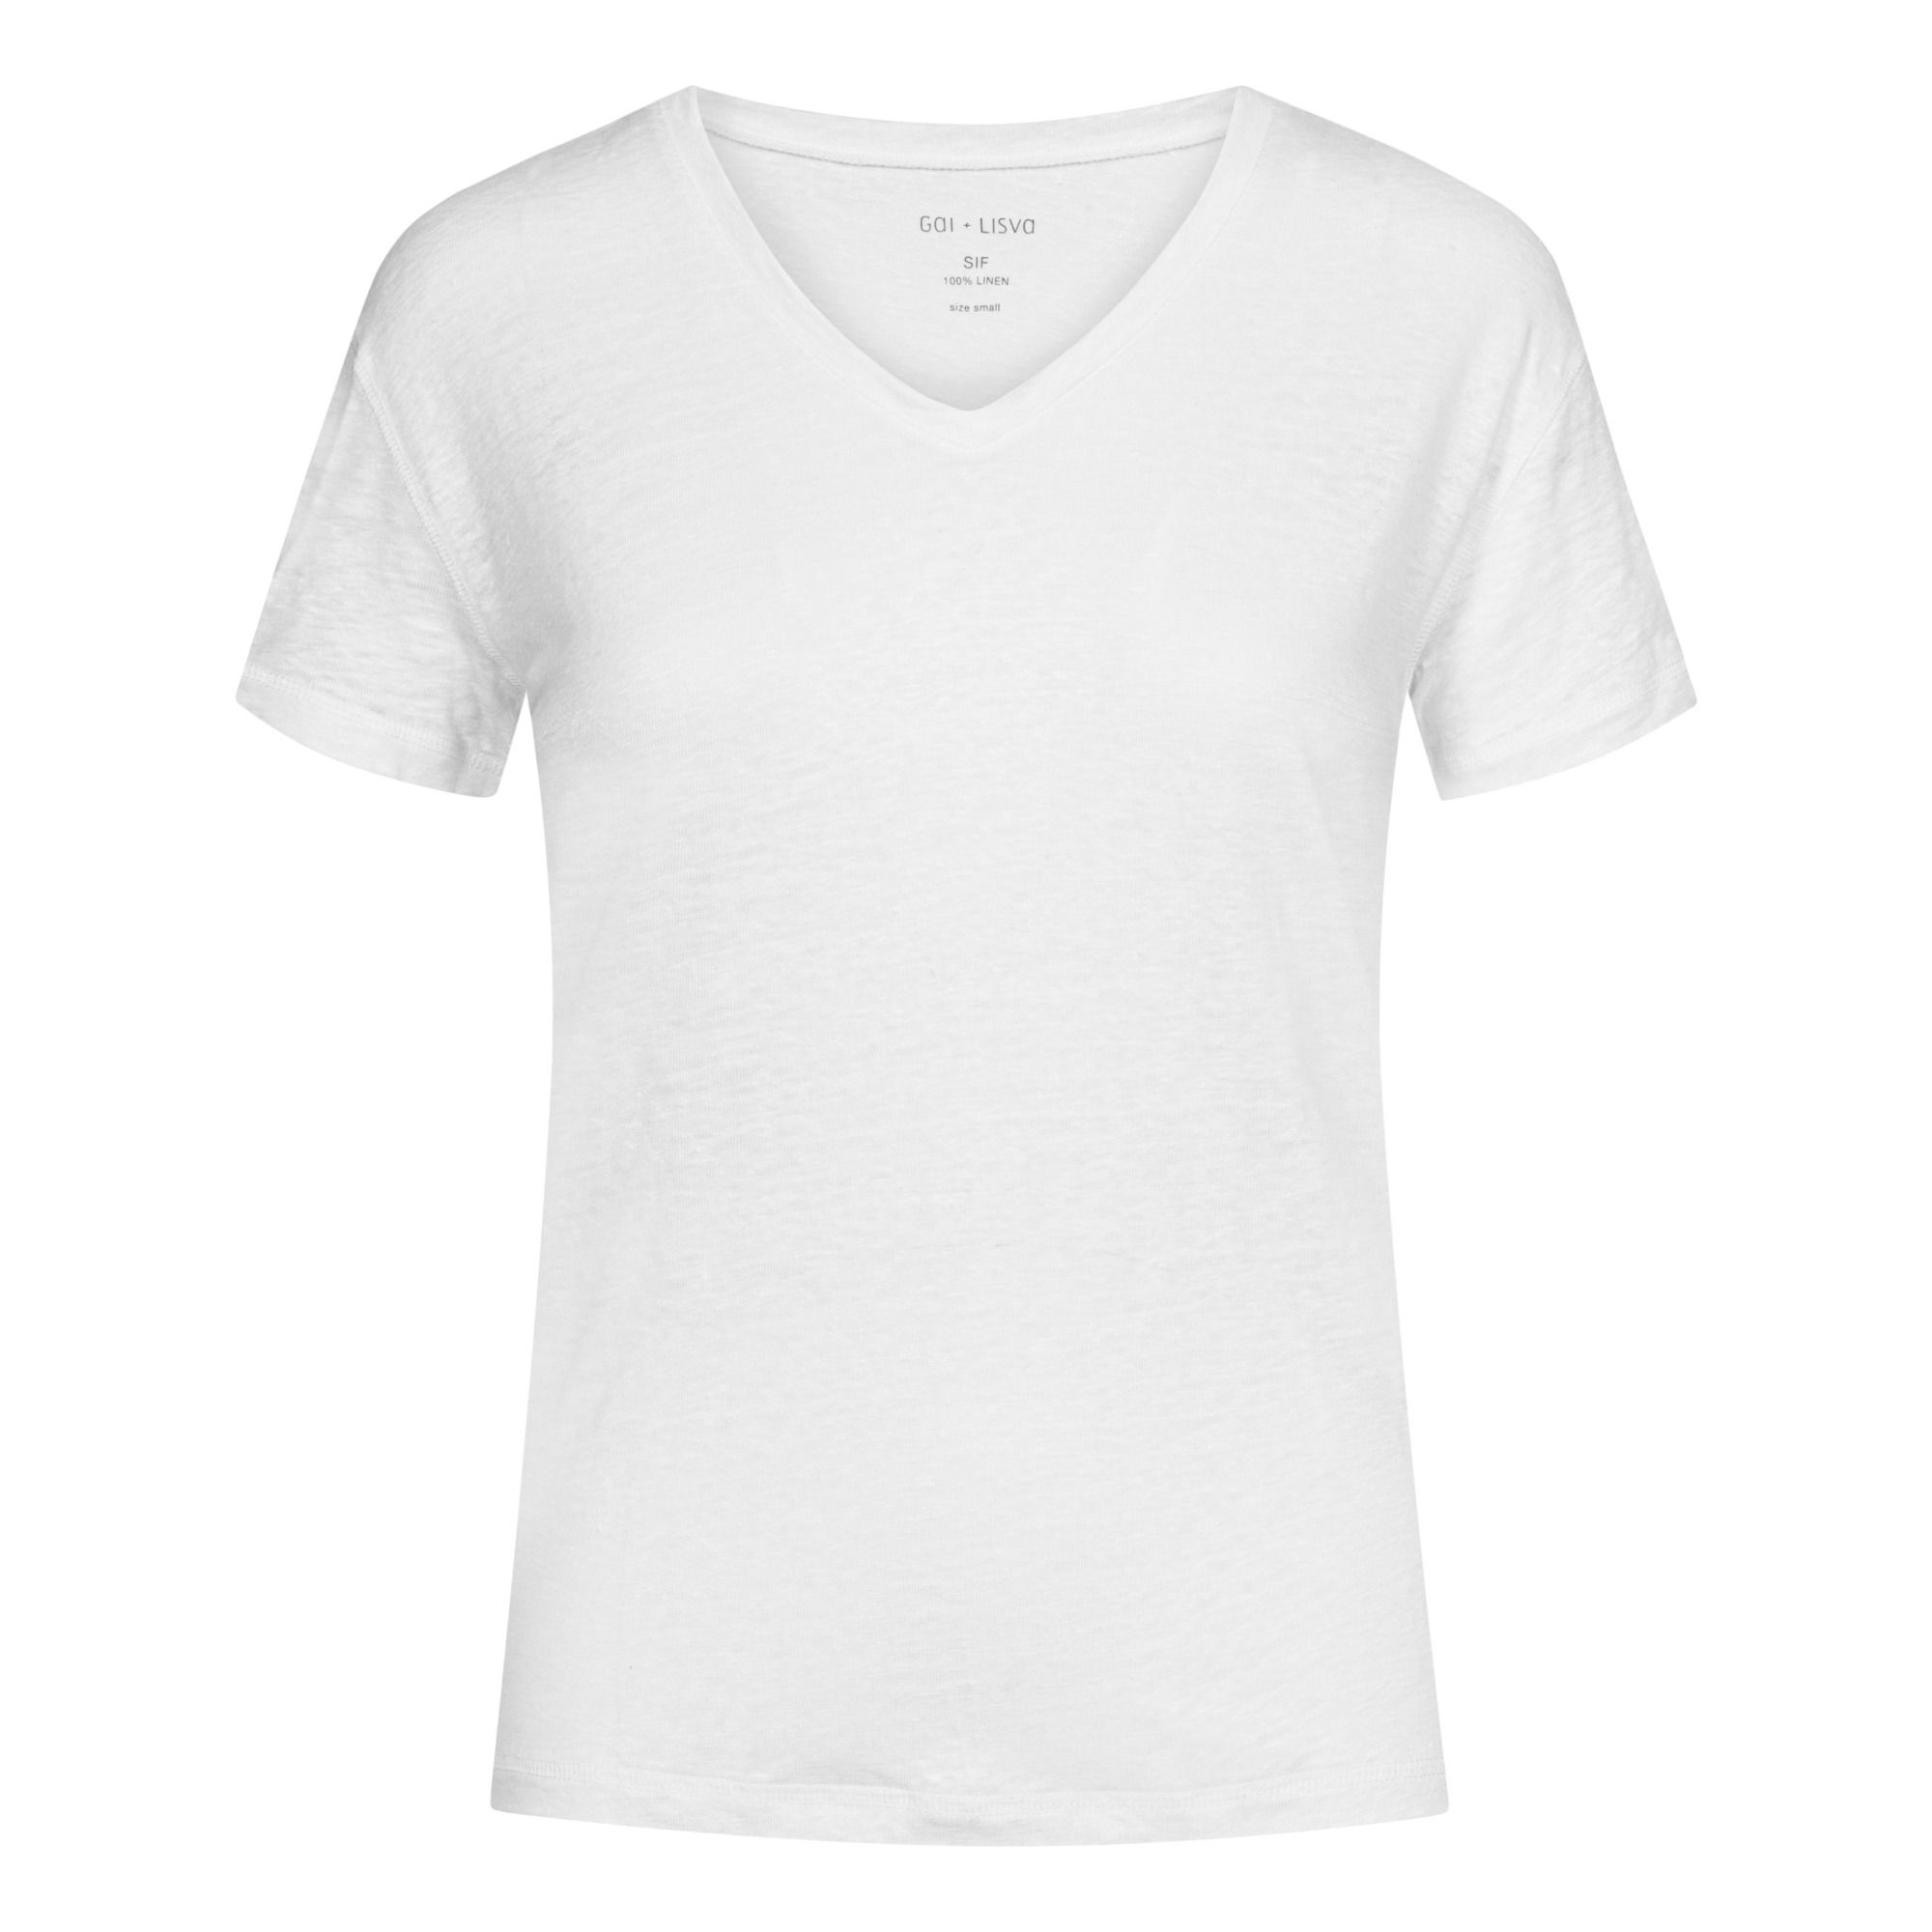 GAI+LISVA - T-shirt Sif Lin - Femme - Blanc